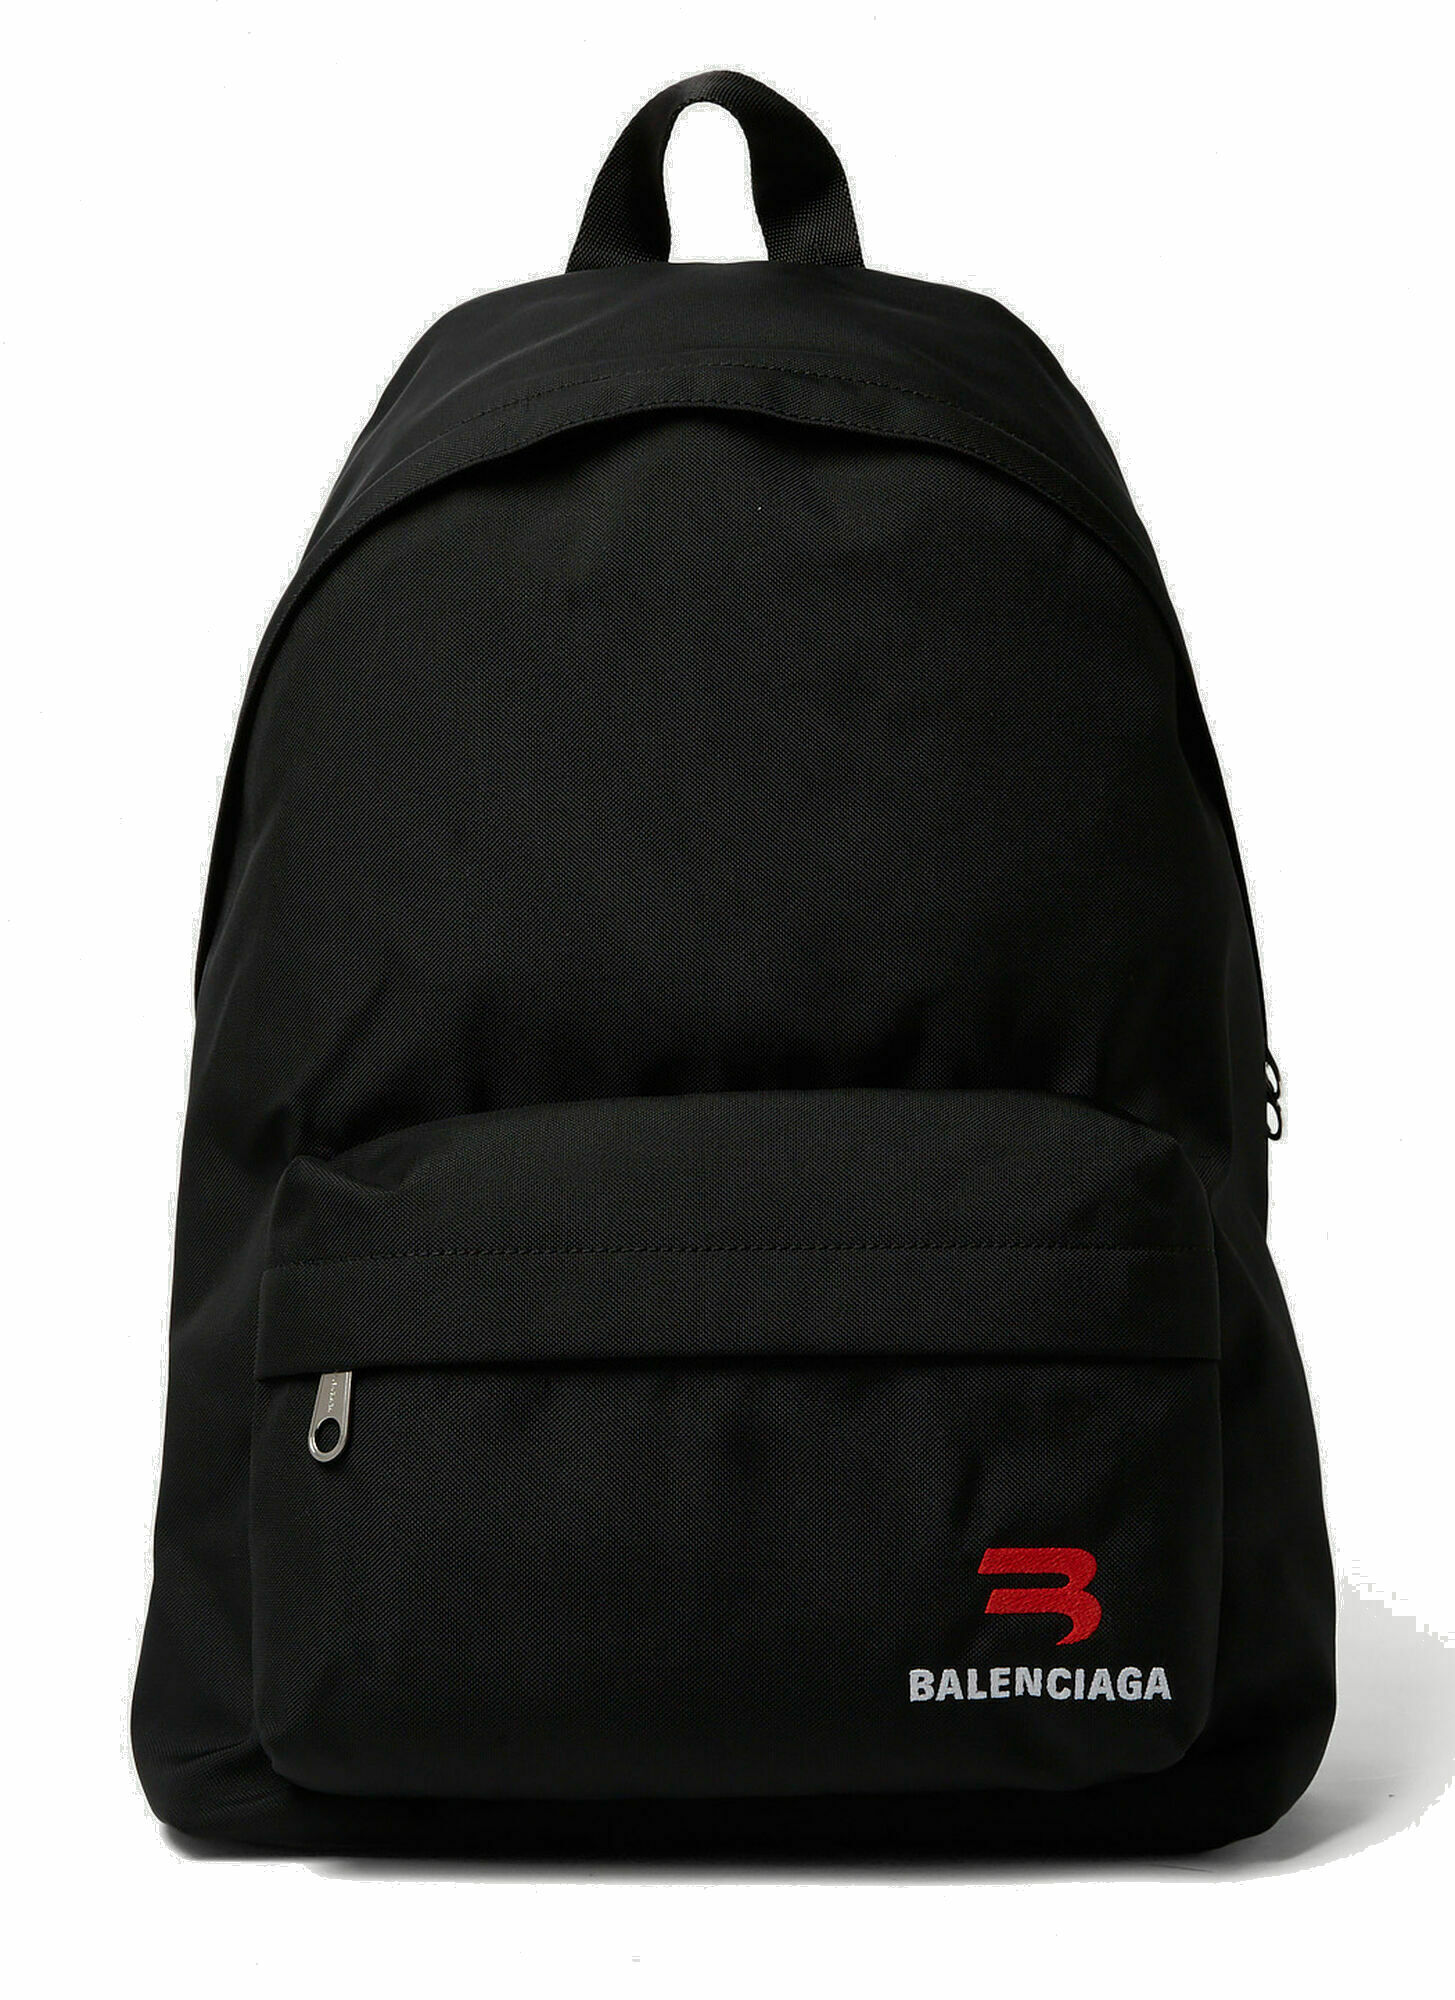 Photo: Explorer Backpack in Black